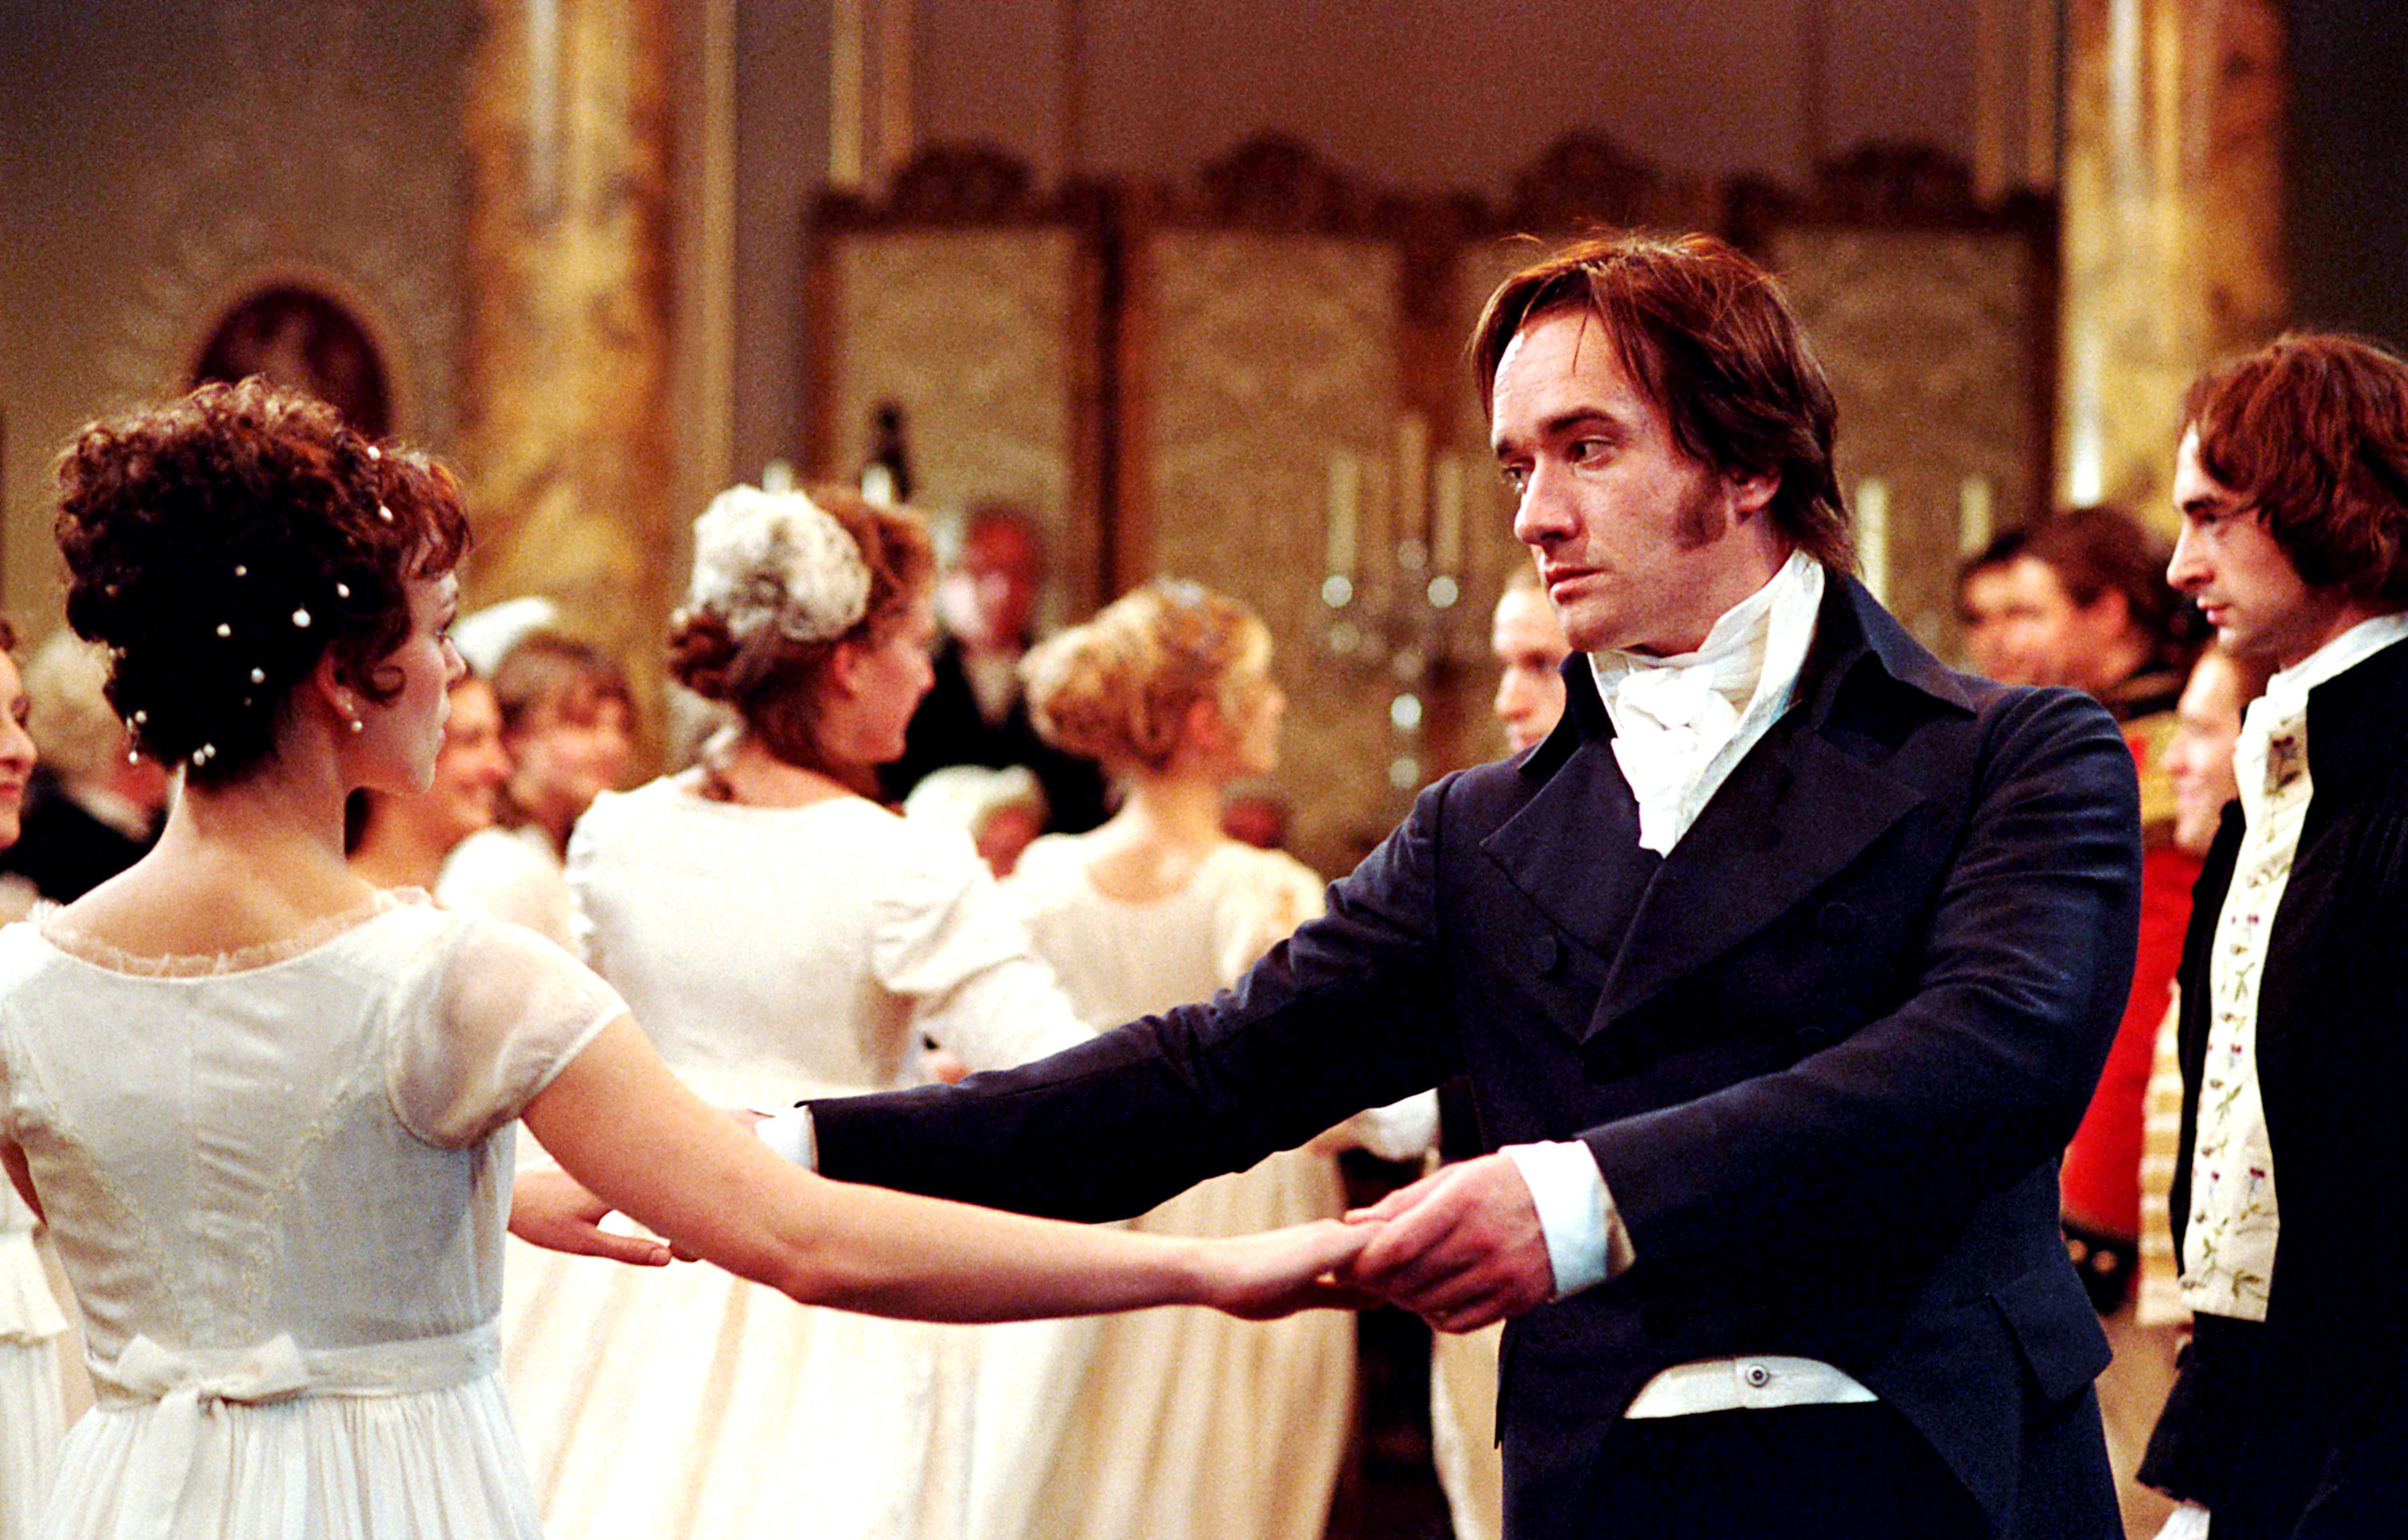 Keira Knightley and Matthew Macfadyen dance together